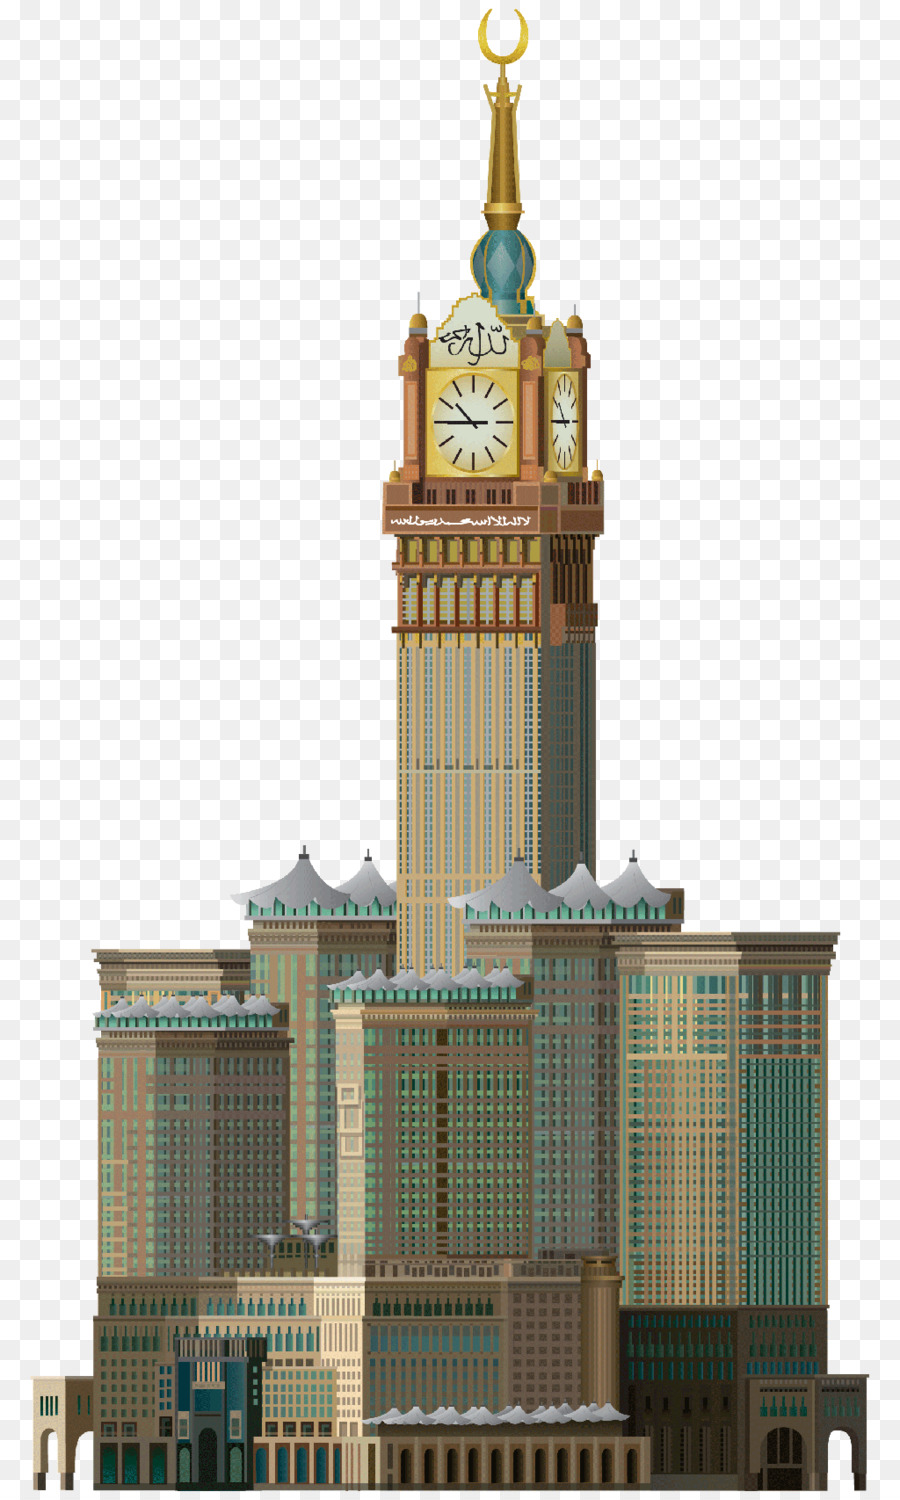 Abraj Al Bait Mecca Royal Clock Tower Hotel Willis Torre Burj Khalifa, Il Taipei 101 - Burj Khalifa